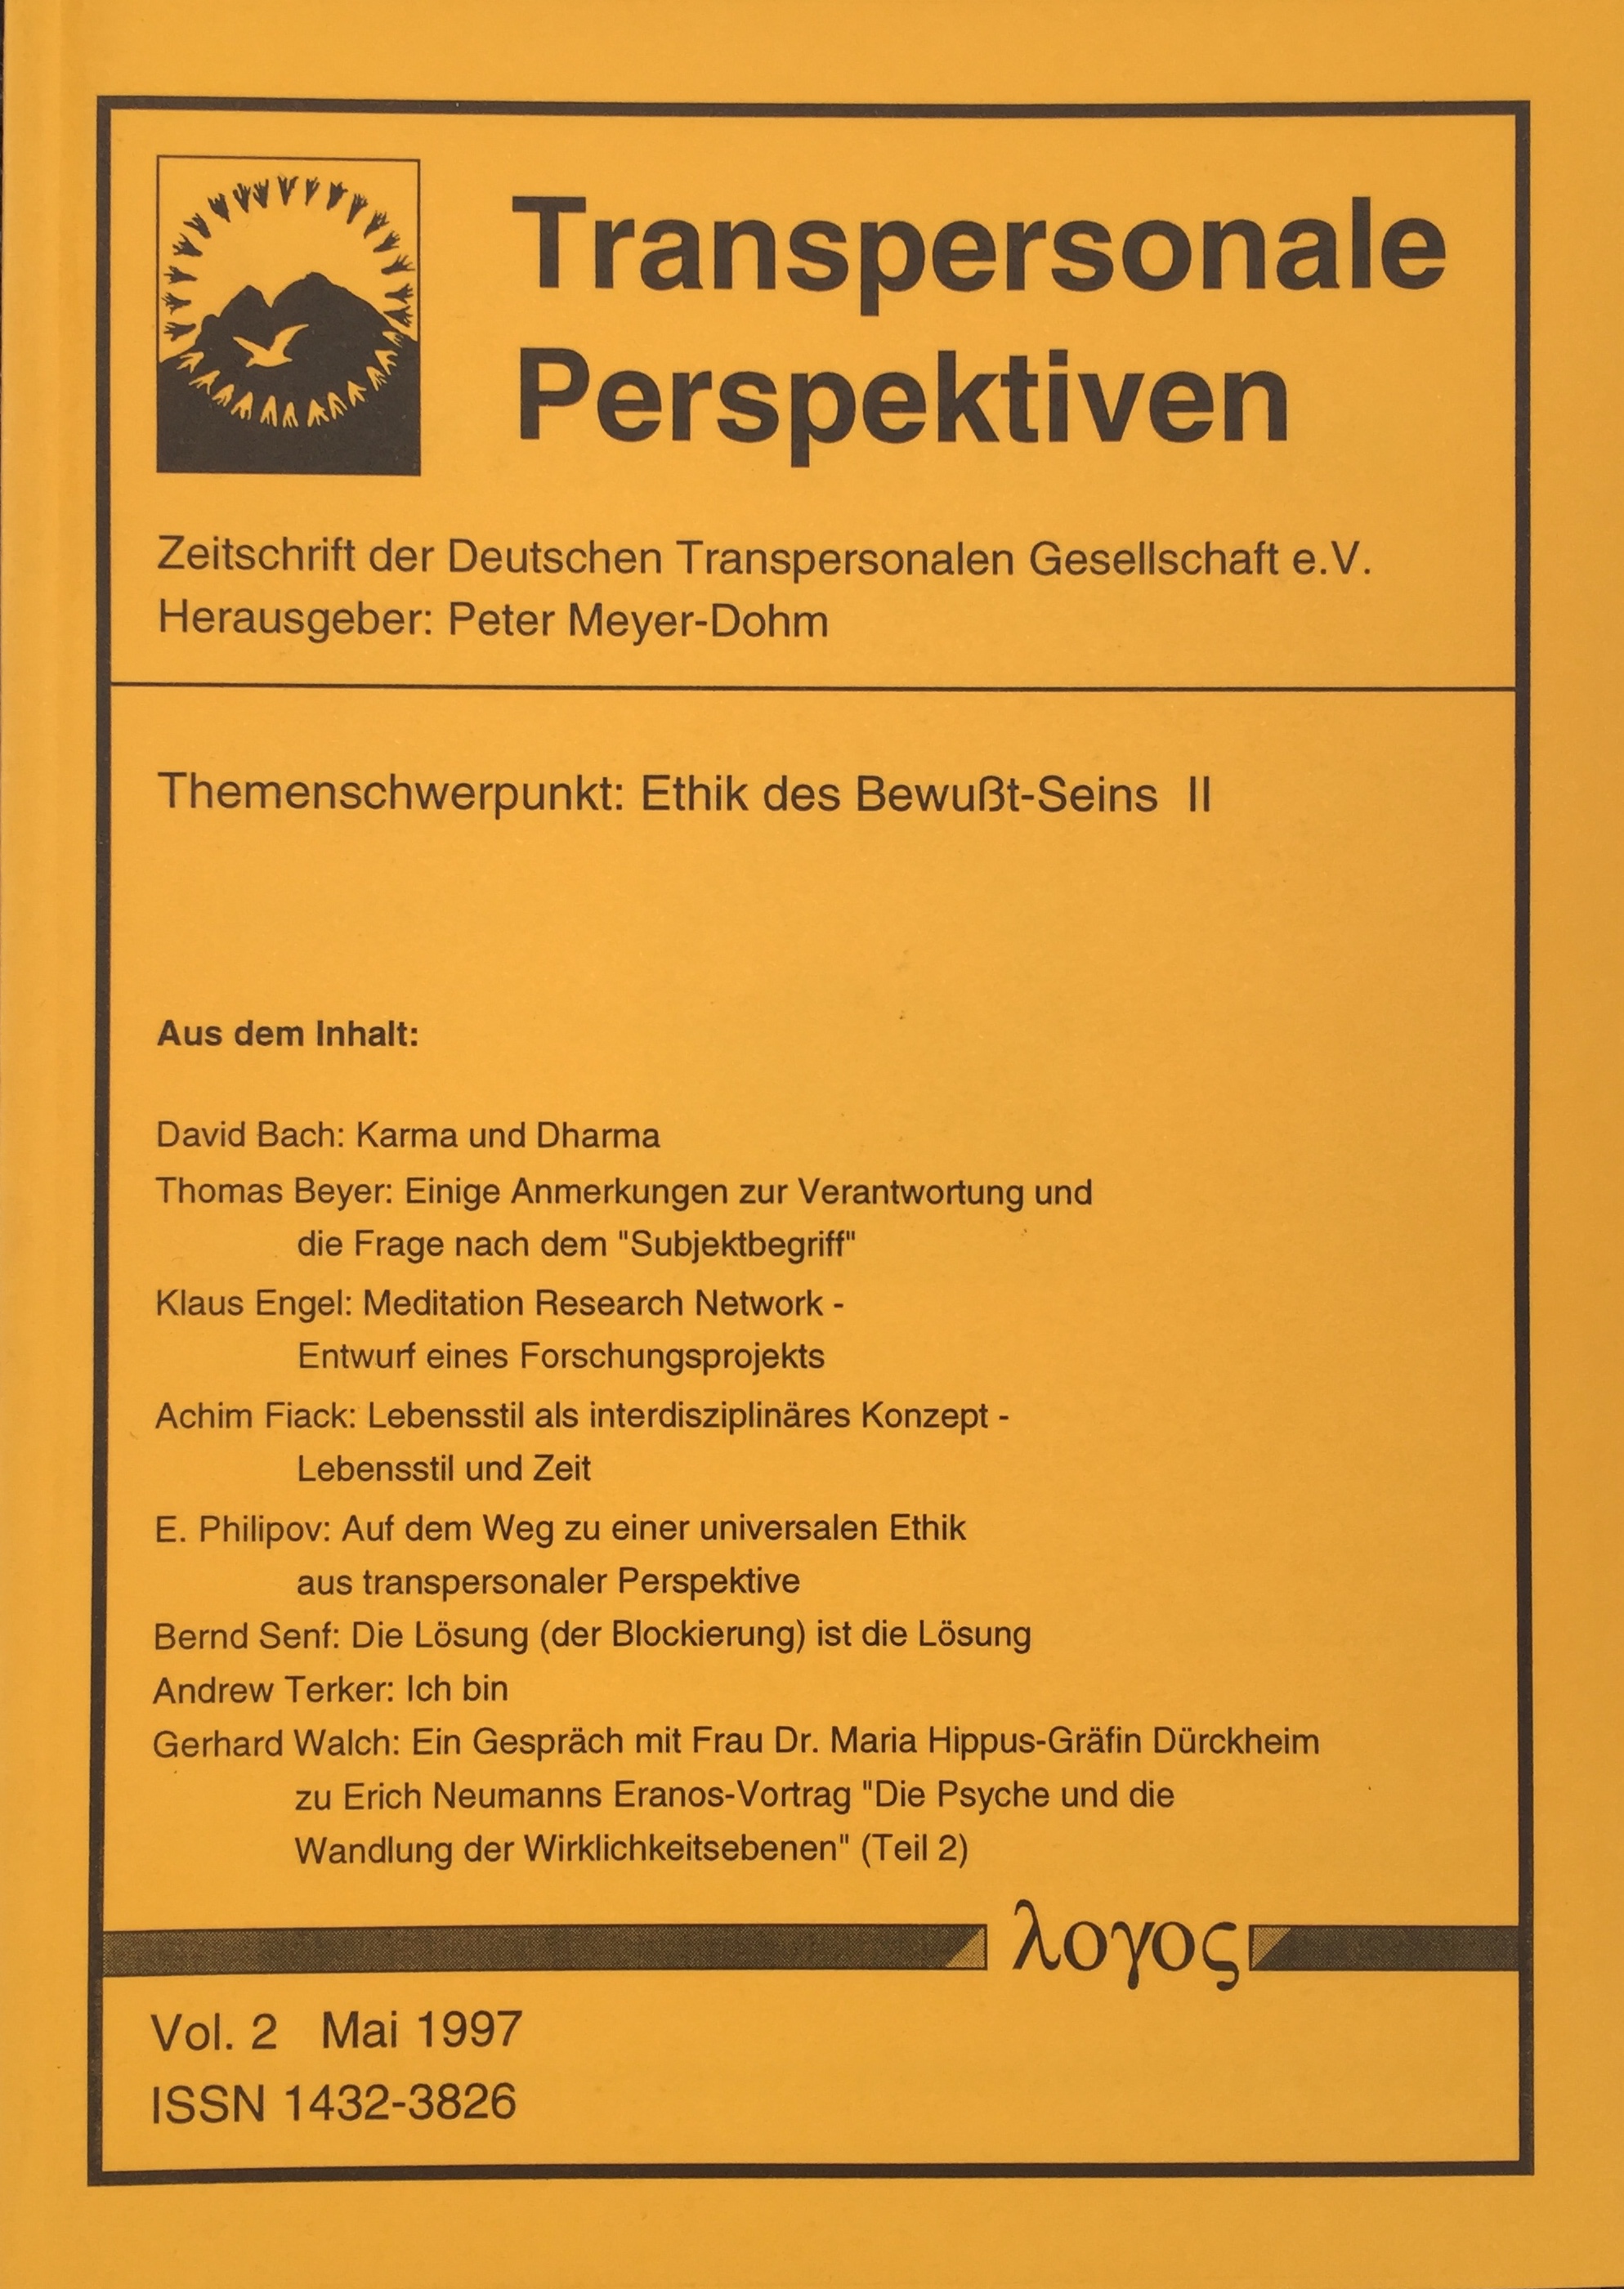 Transpersonale Perspektiven Volume 2/1997